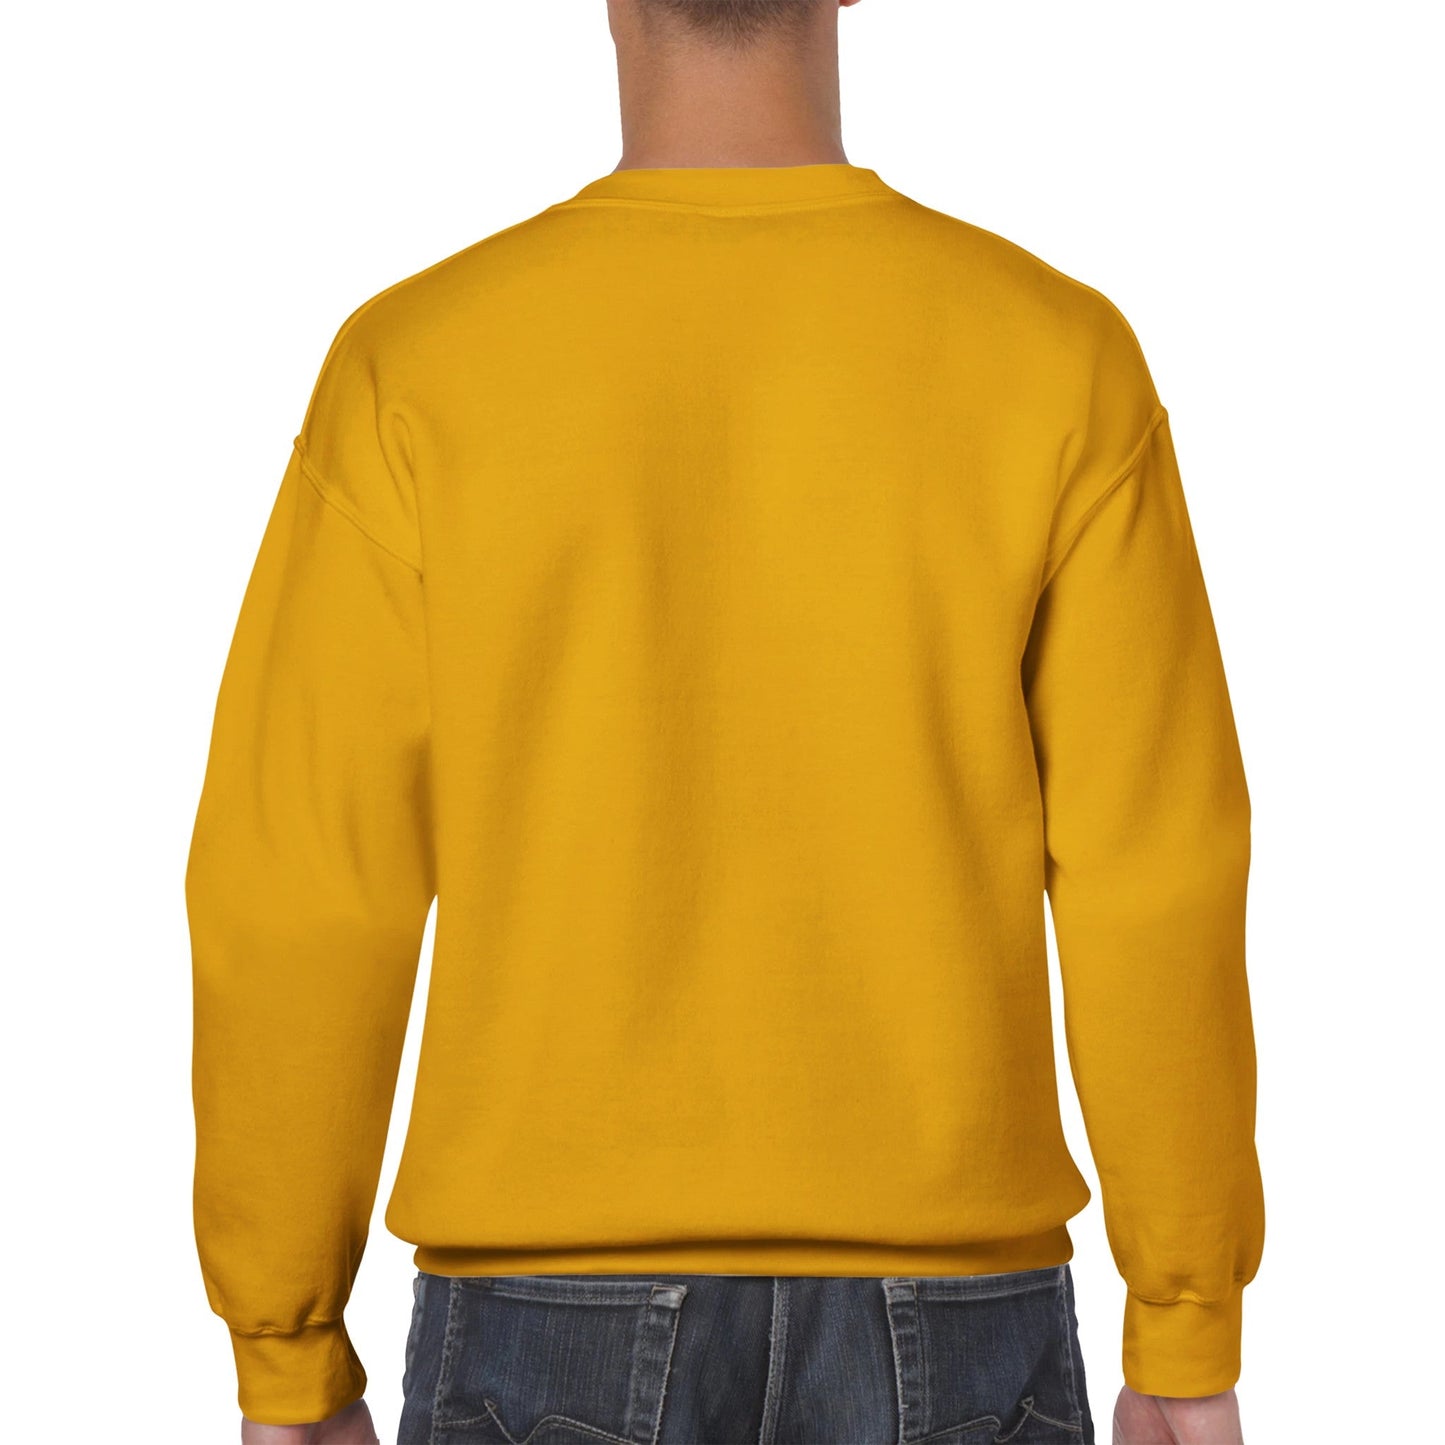 Classic Unisex Crewneck Sweatshirt - Go Long Young Man - The Vandi Company